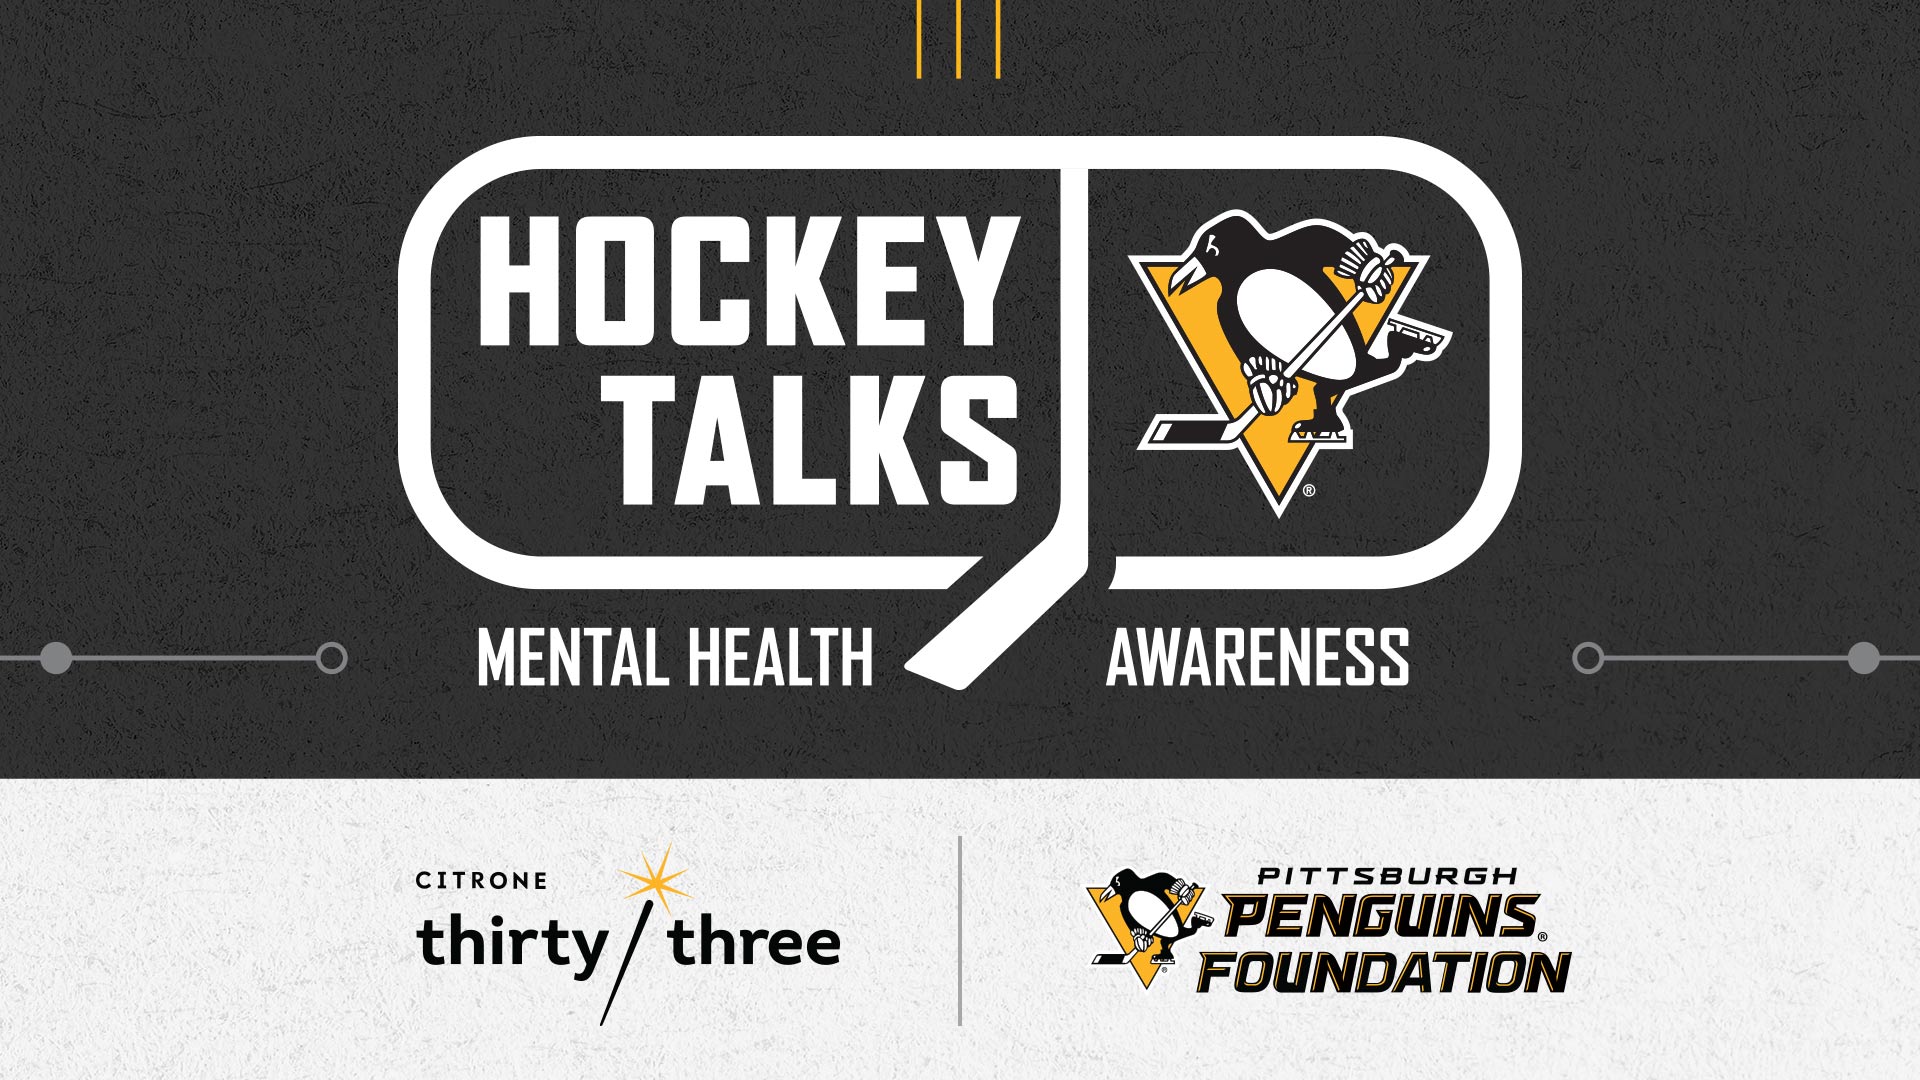 Break the Ice Hockey Talks Pittsburgh Penguins Foundation